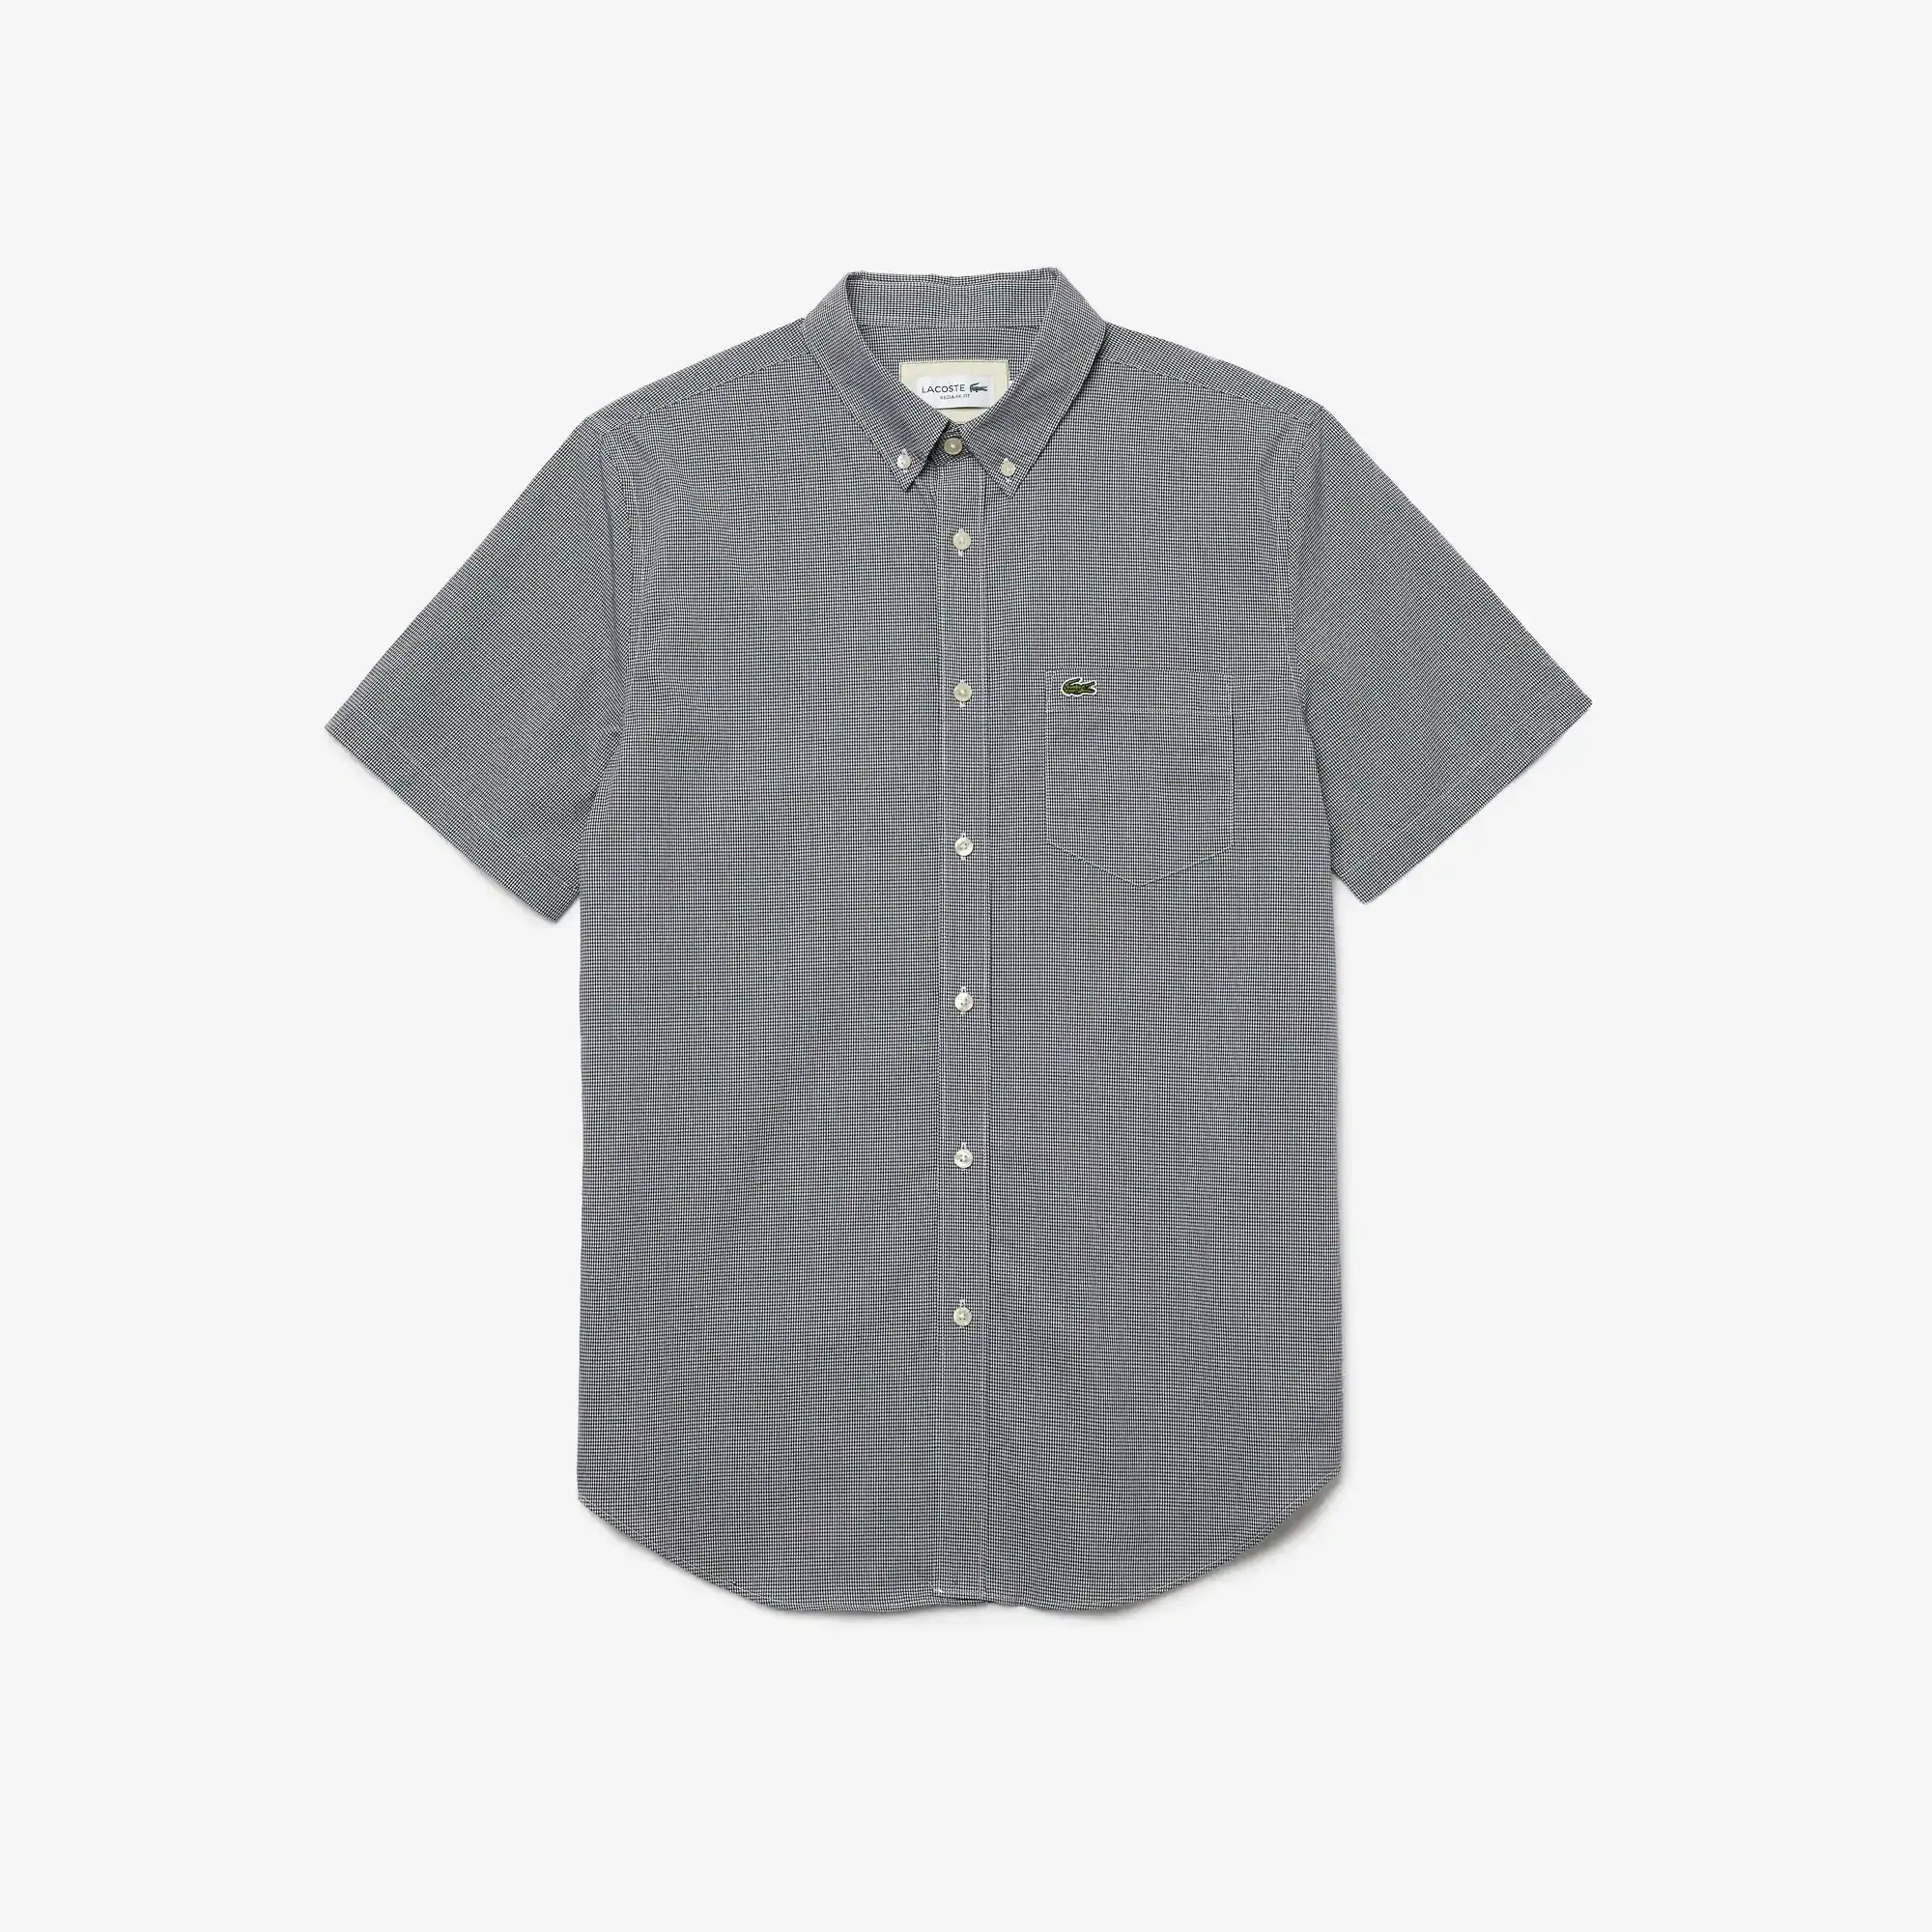 Lacoste Men's Regular Fit Gingham Check Shirt. 2